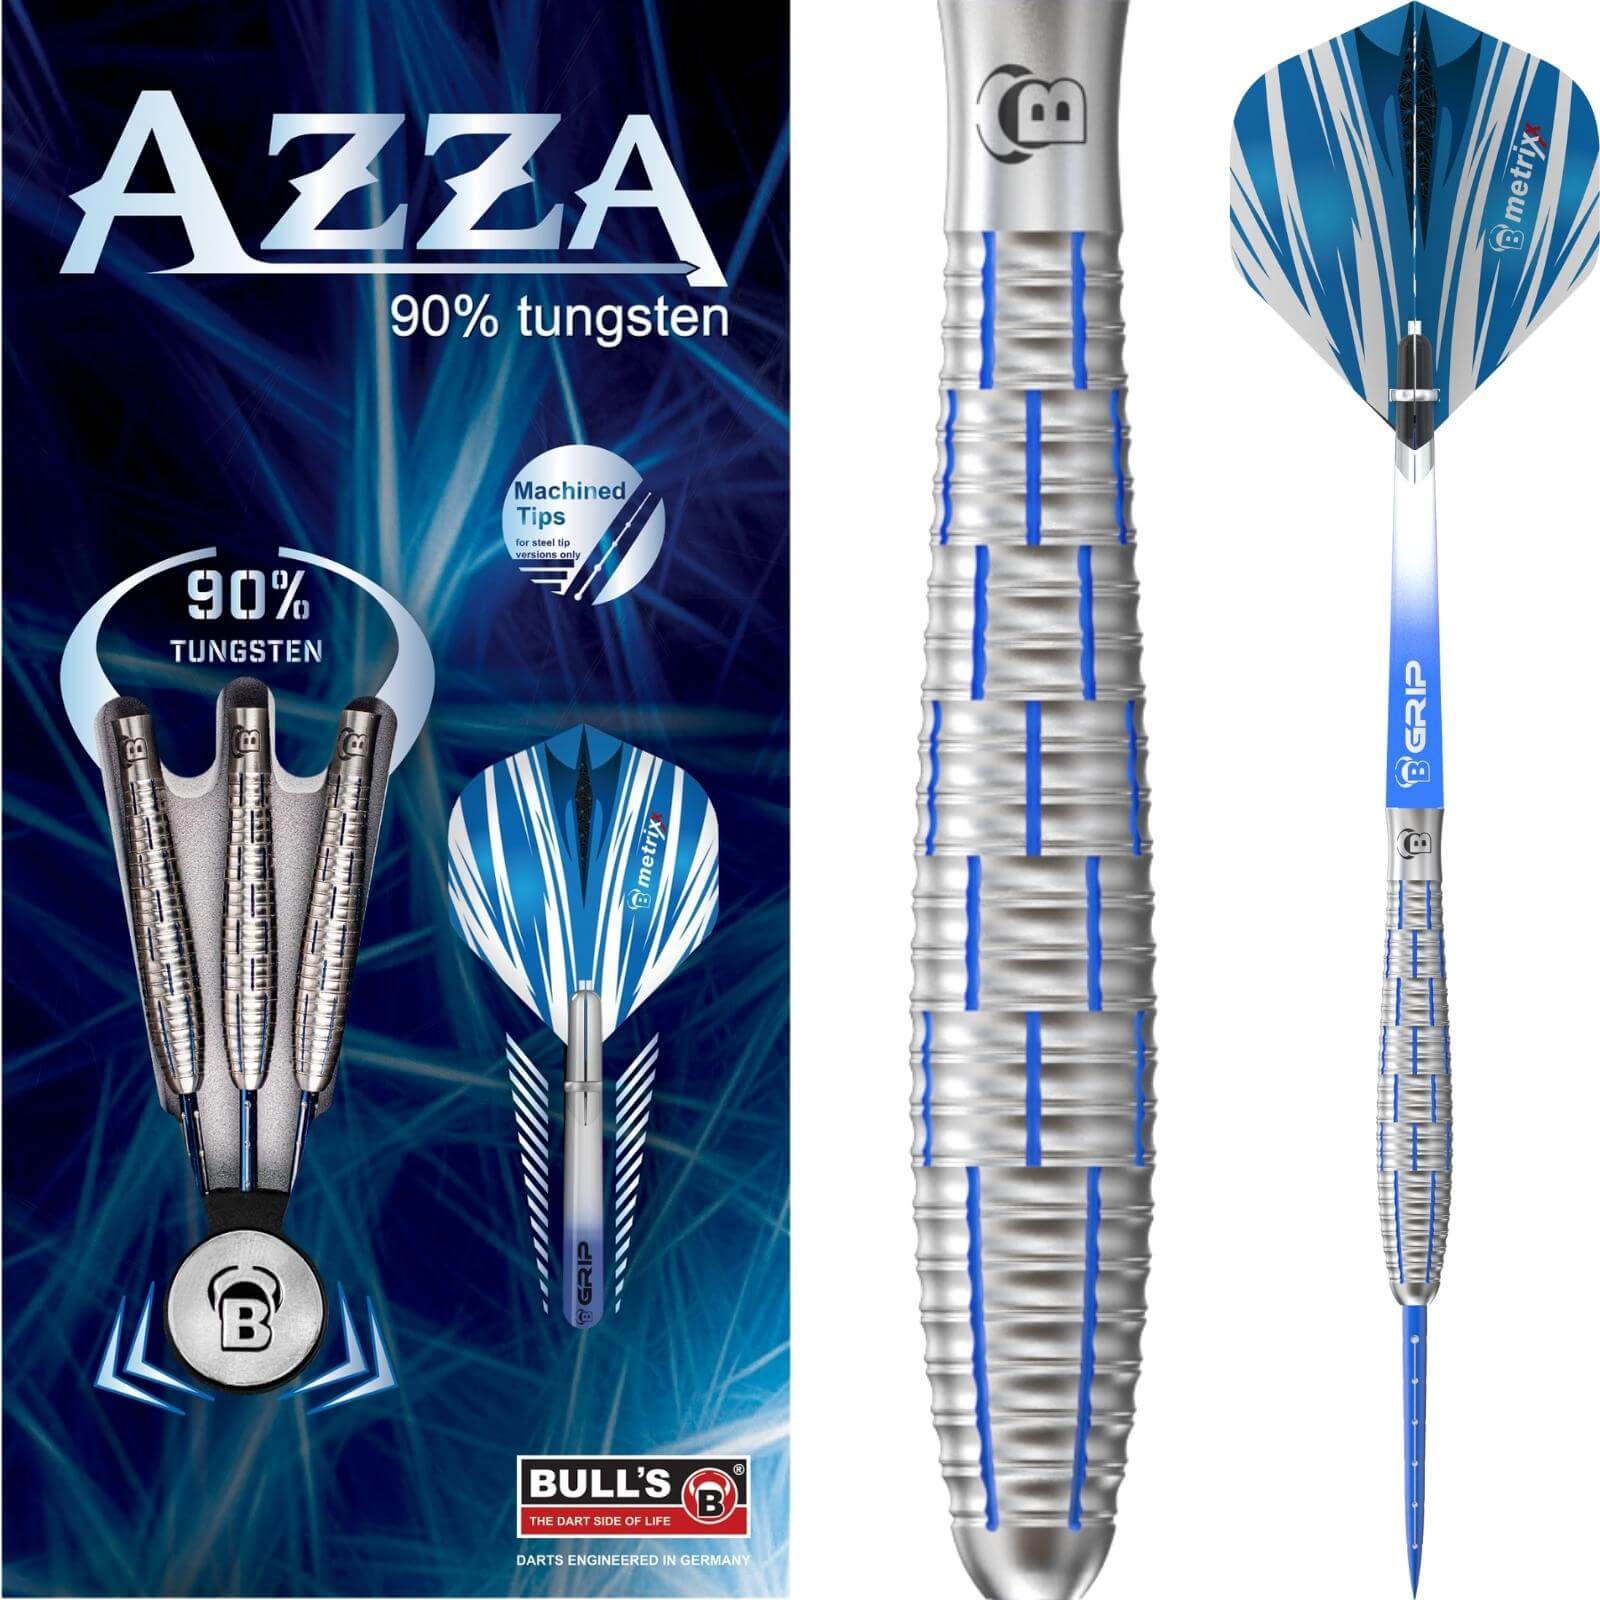 Darts - BULL'S - Azza Darts - Steel Tip - 90% Tungsten - 22g 24g 